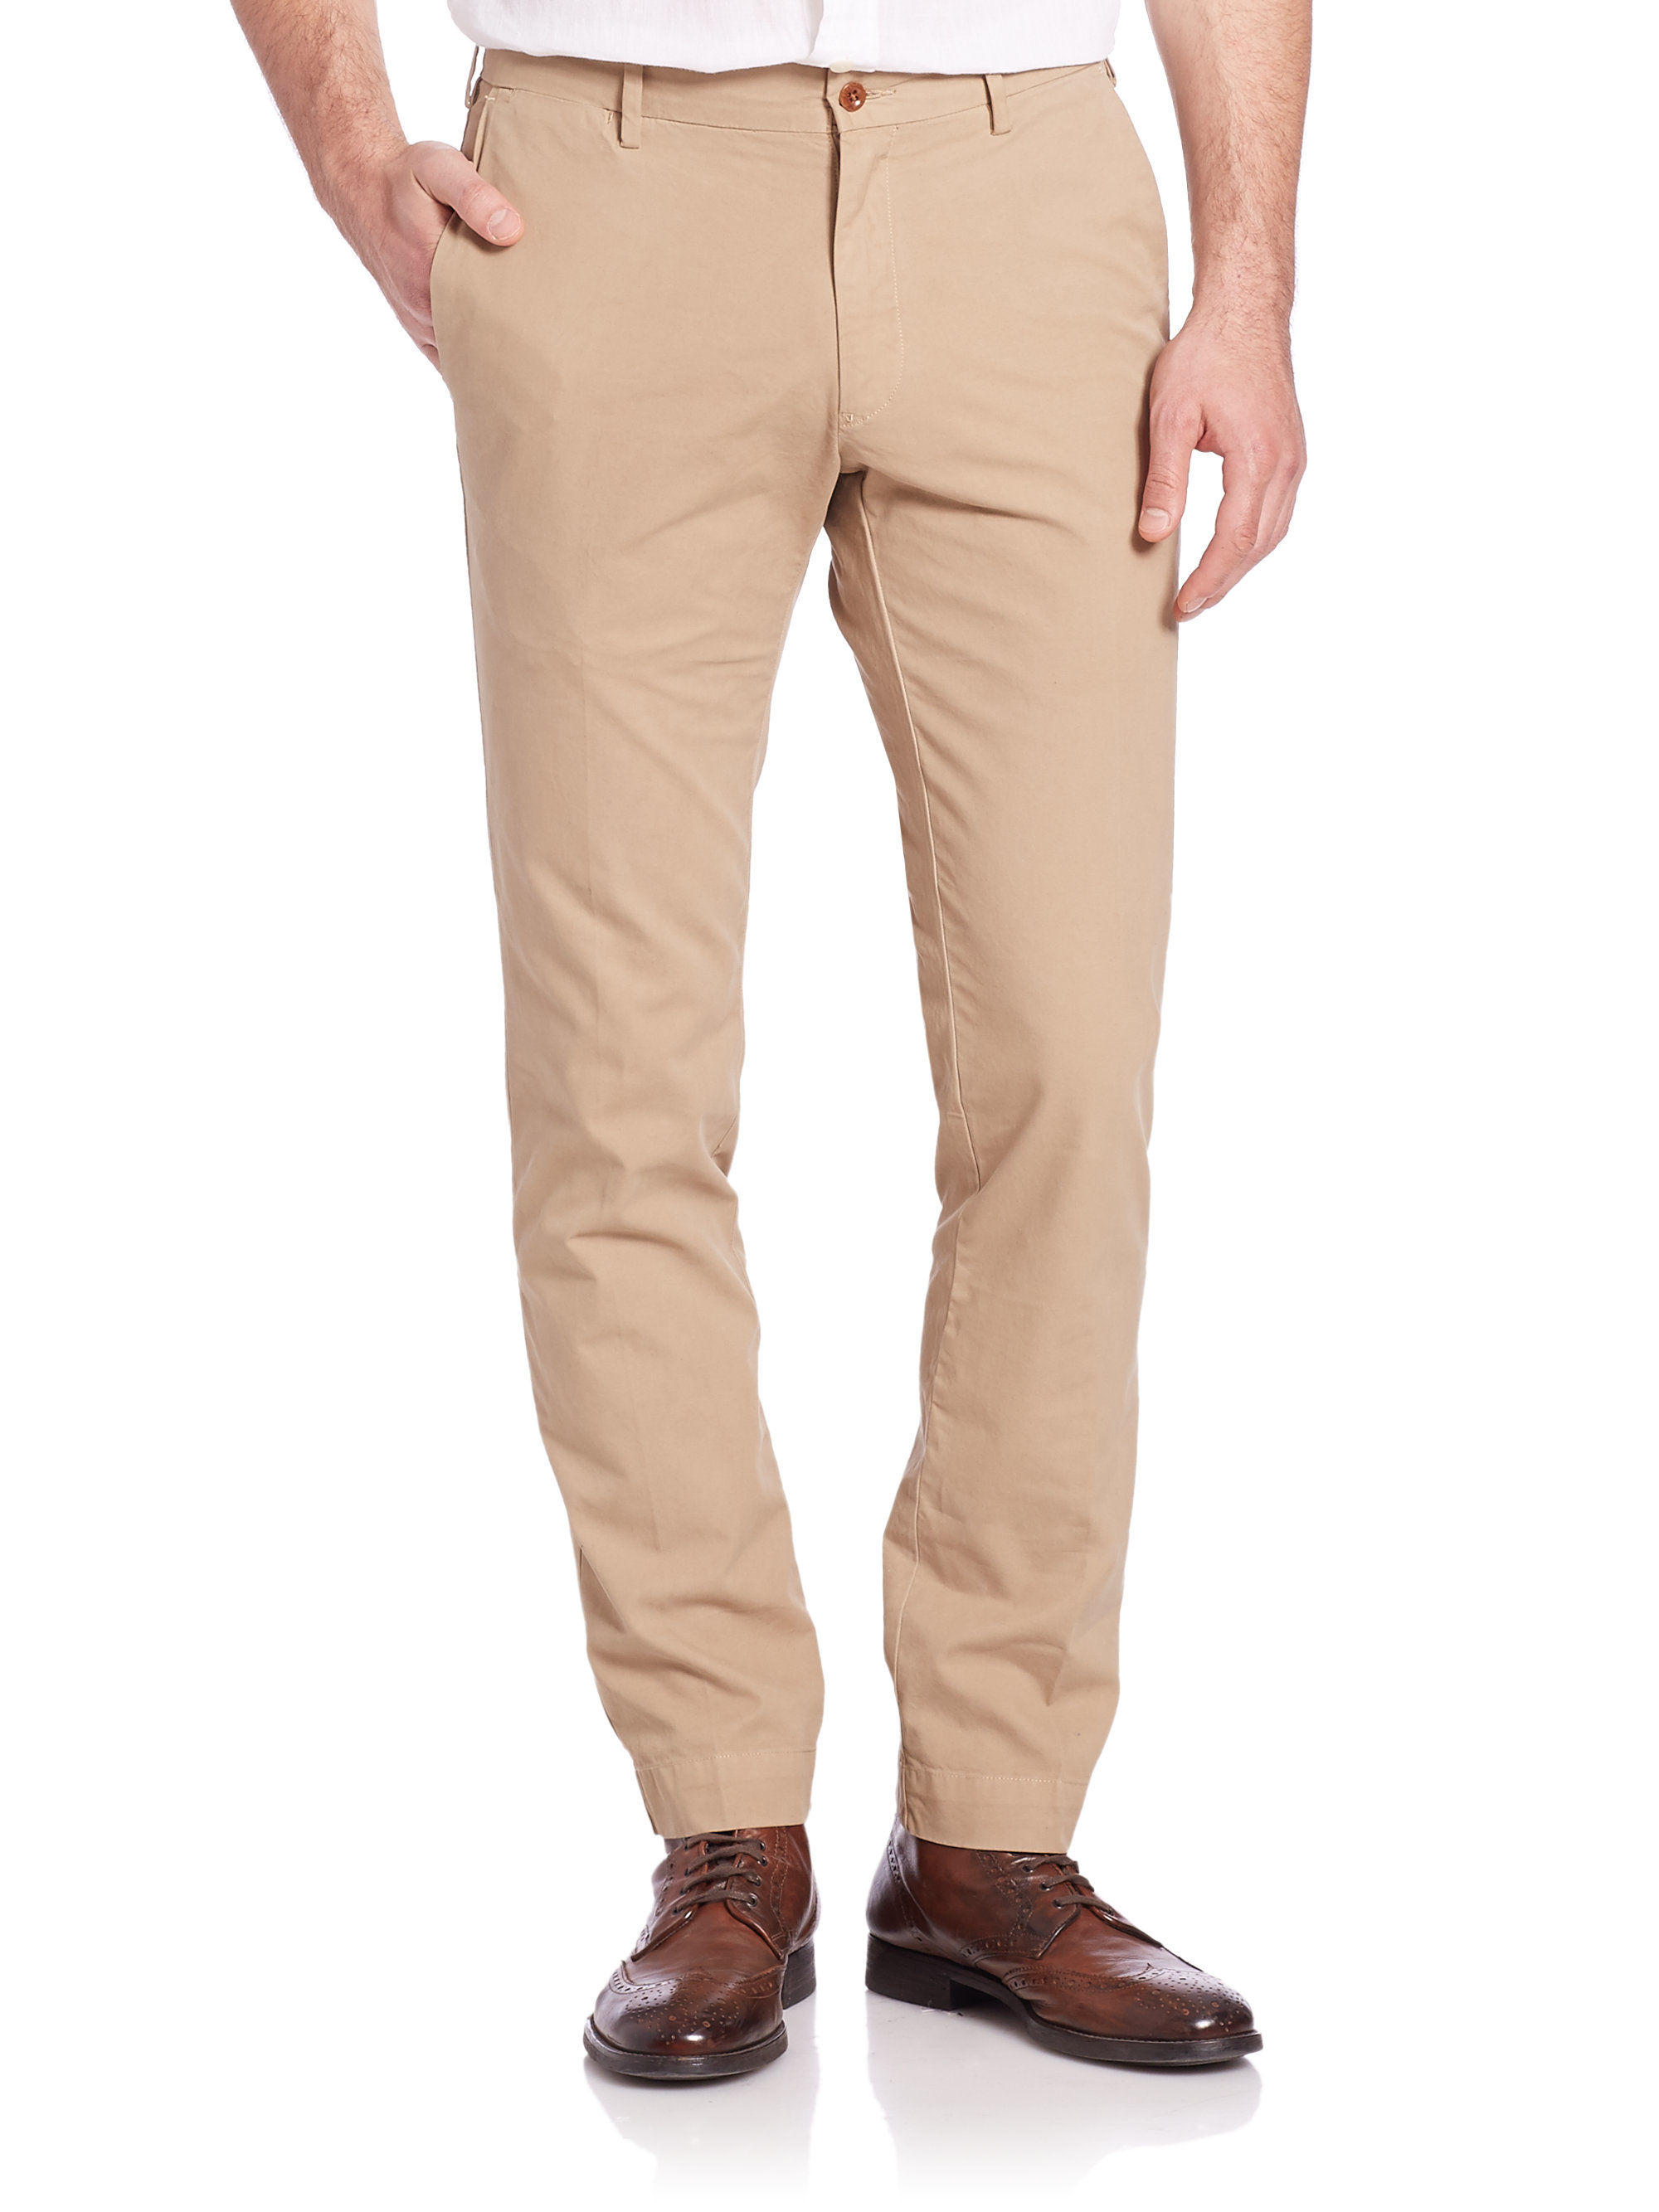 Polo Ralph Lauren Slim-fit Newport Pants in Khaki (Natural) for Men - Lyst